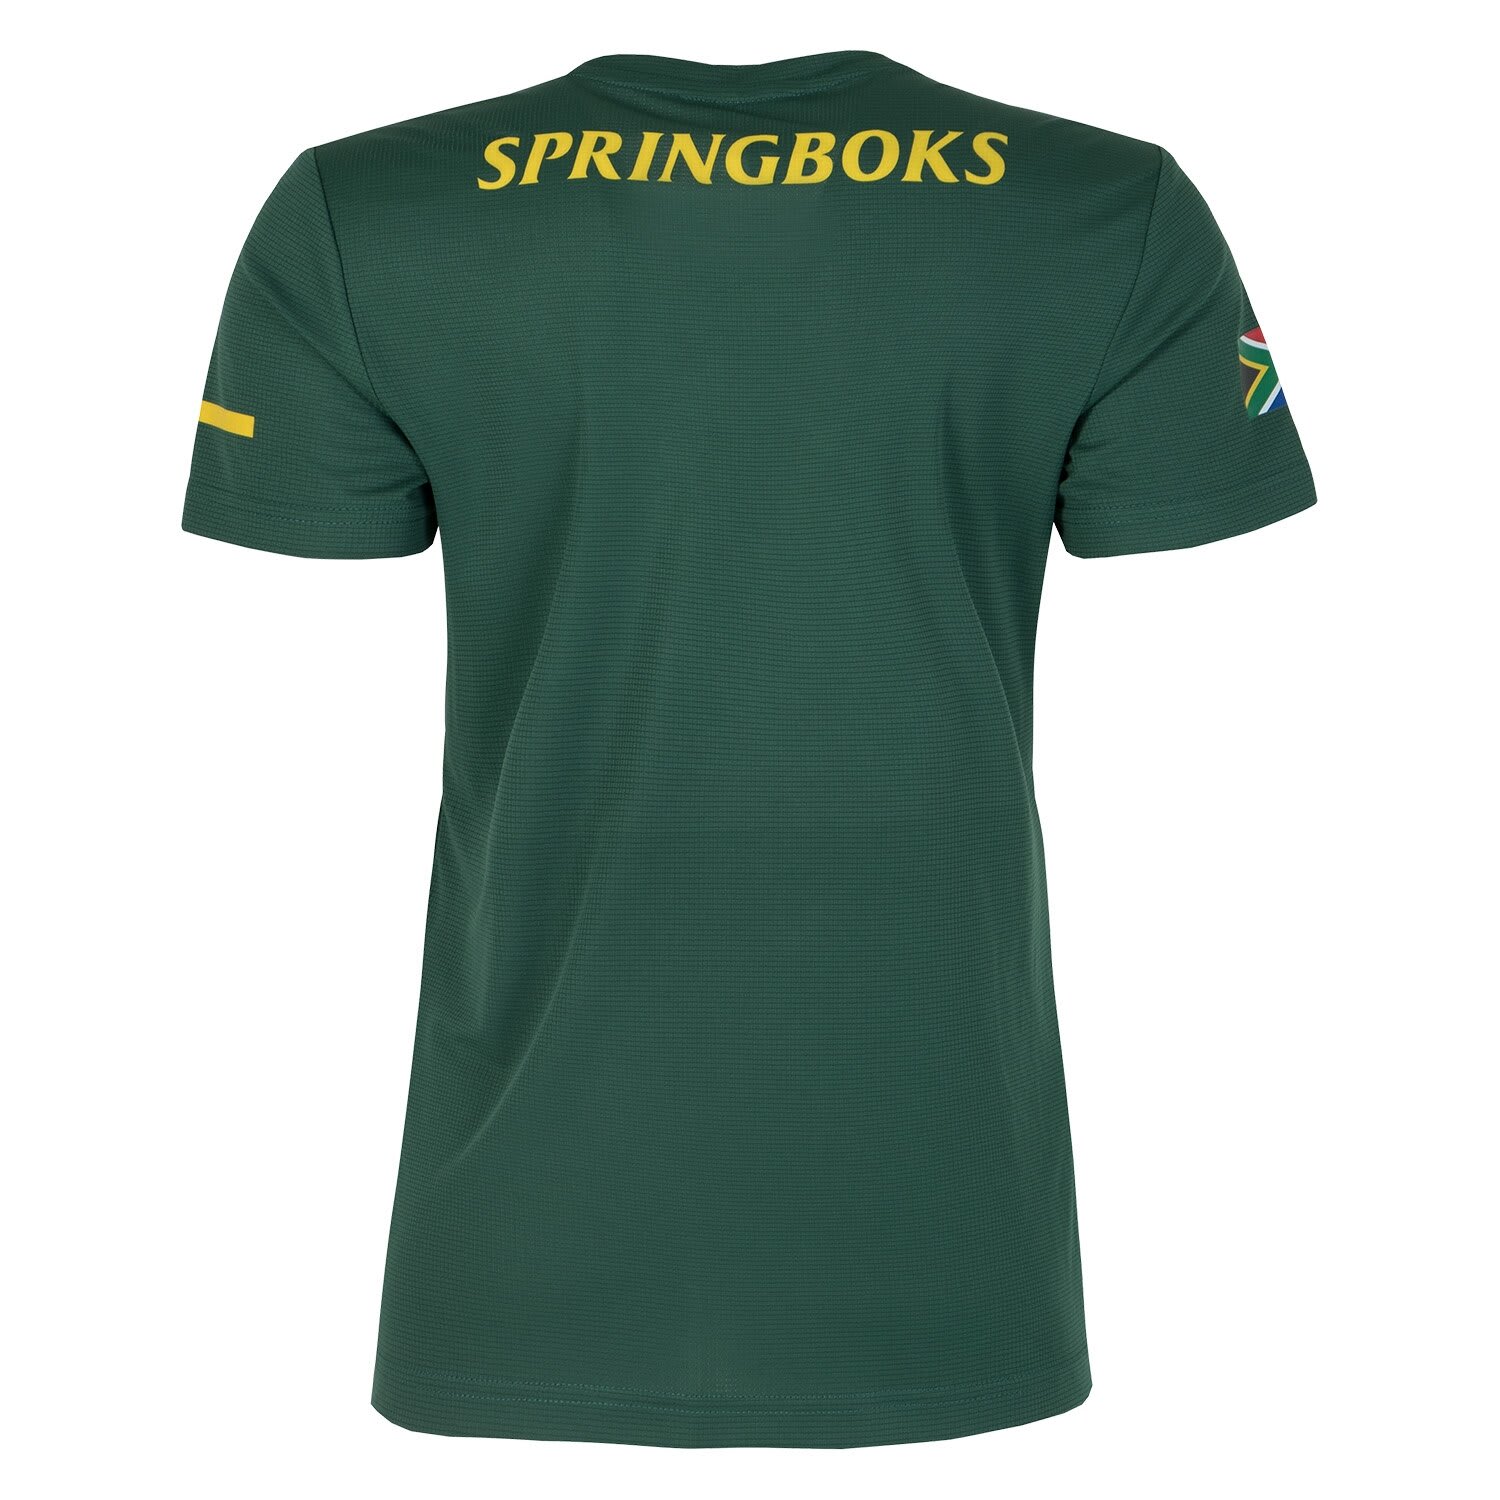 Springboks Womens Tee by Springbok Price R 449,9 PLU 1166086 Sportsmans Warehouse